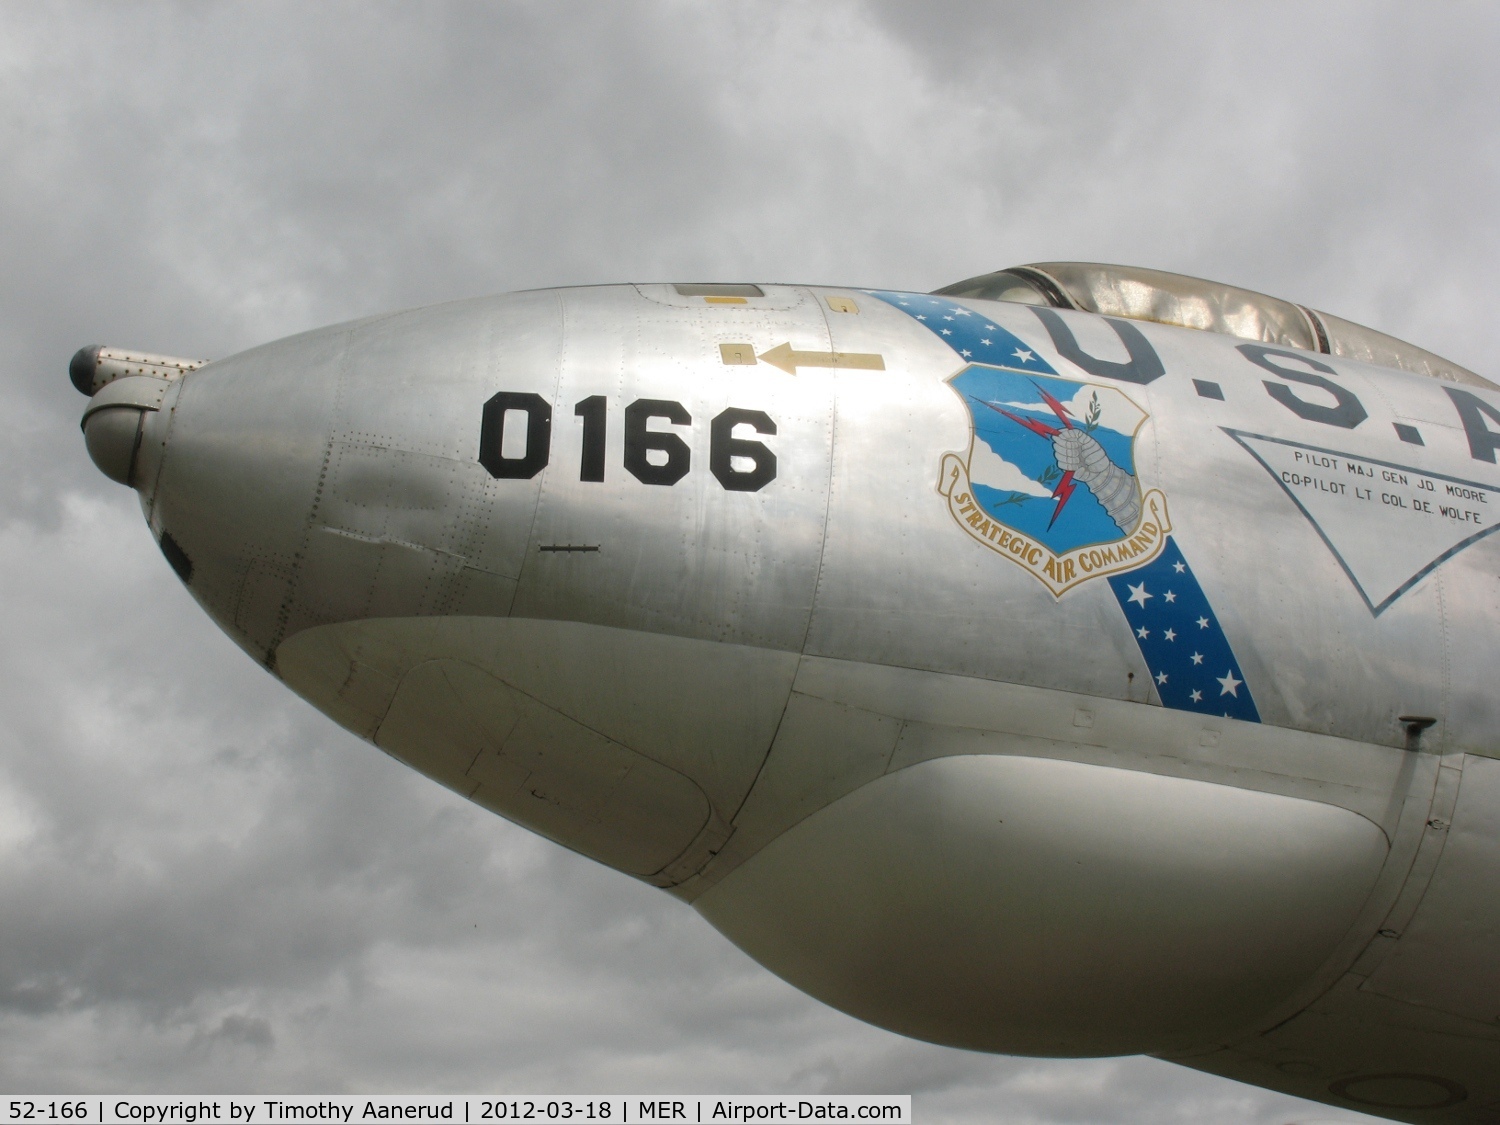 52-166, 1952 Douglas-Tulsa B-47E-25-DT Stratojet C/N 44020, 1952 Douglas-Tulsa B-47E-25-DT Stratojet, c/n: 44020